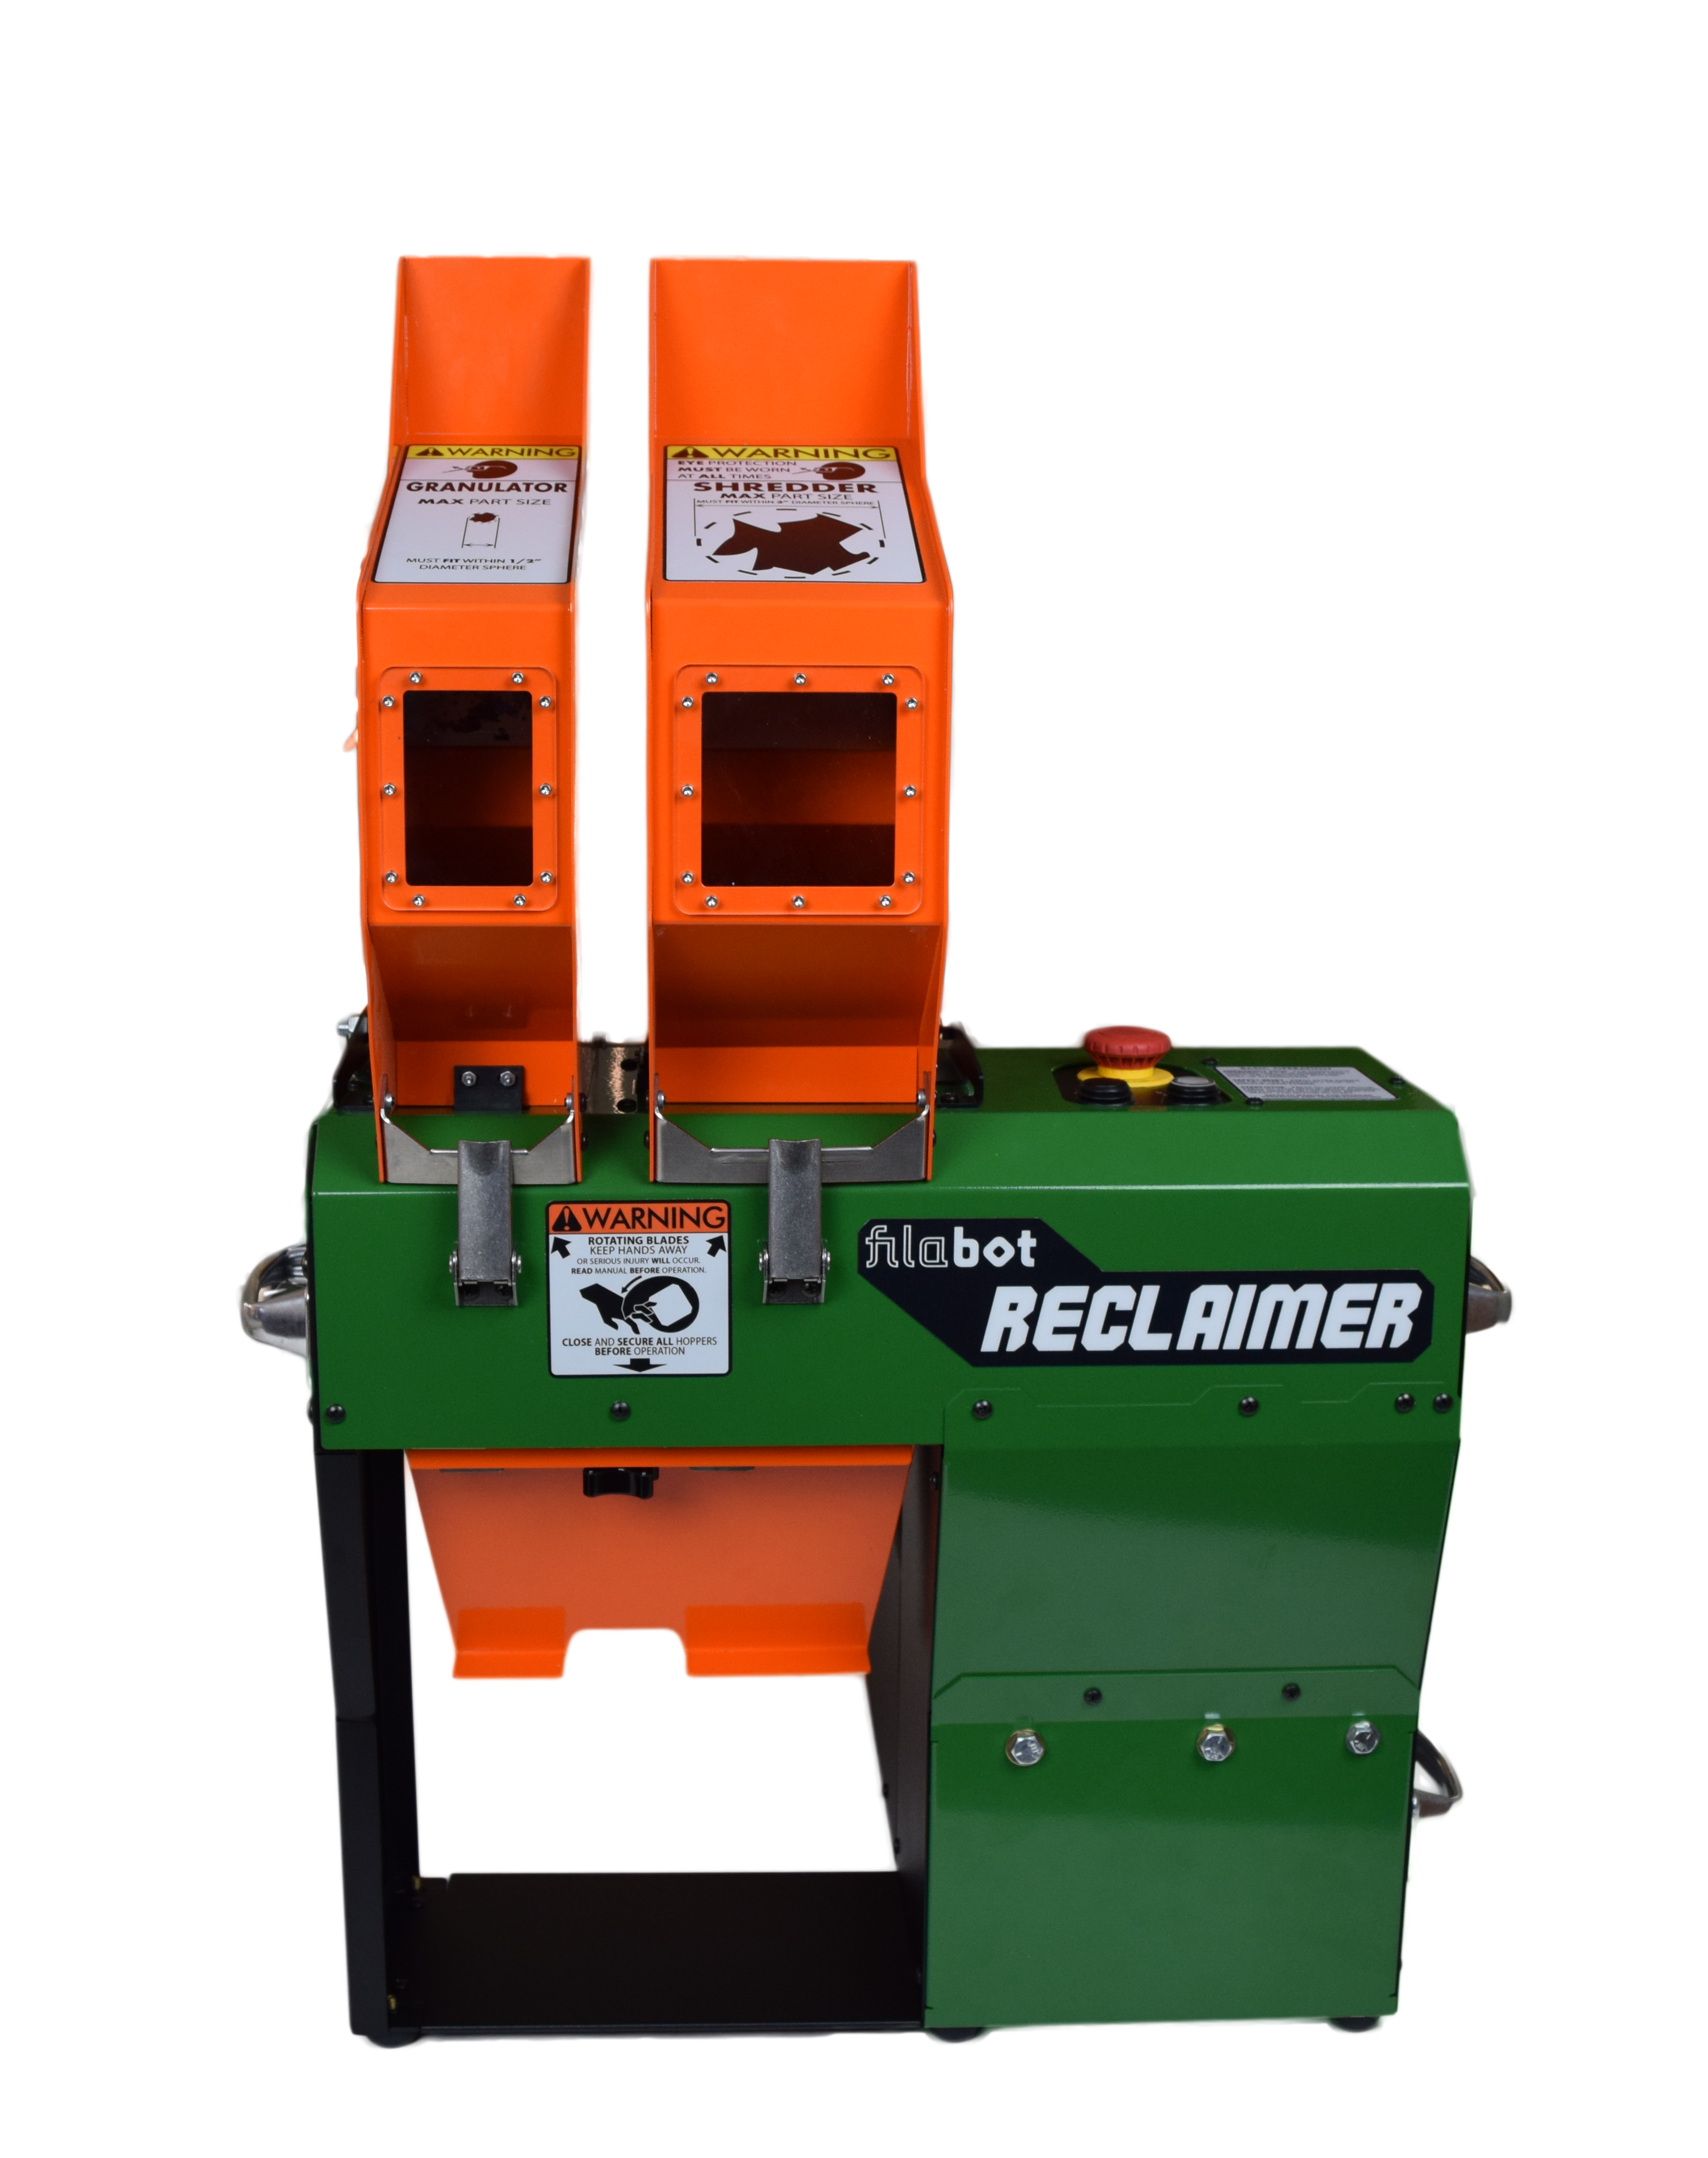 Recycling Setup - Filabot Reclaimer and Filabot Pelletizer - Filabot